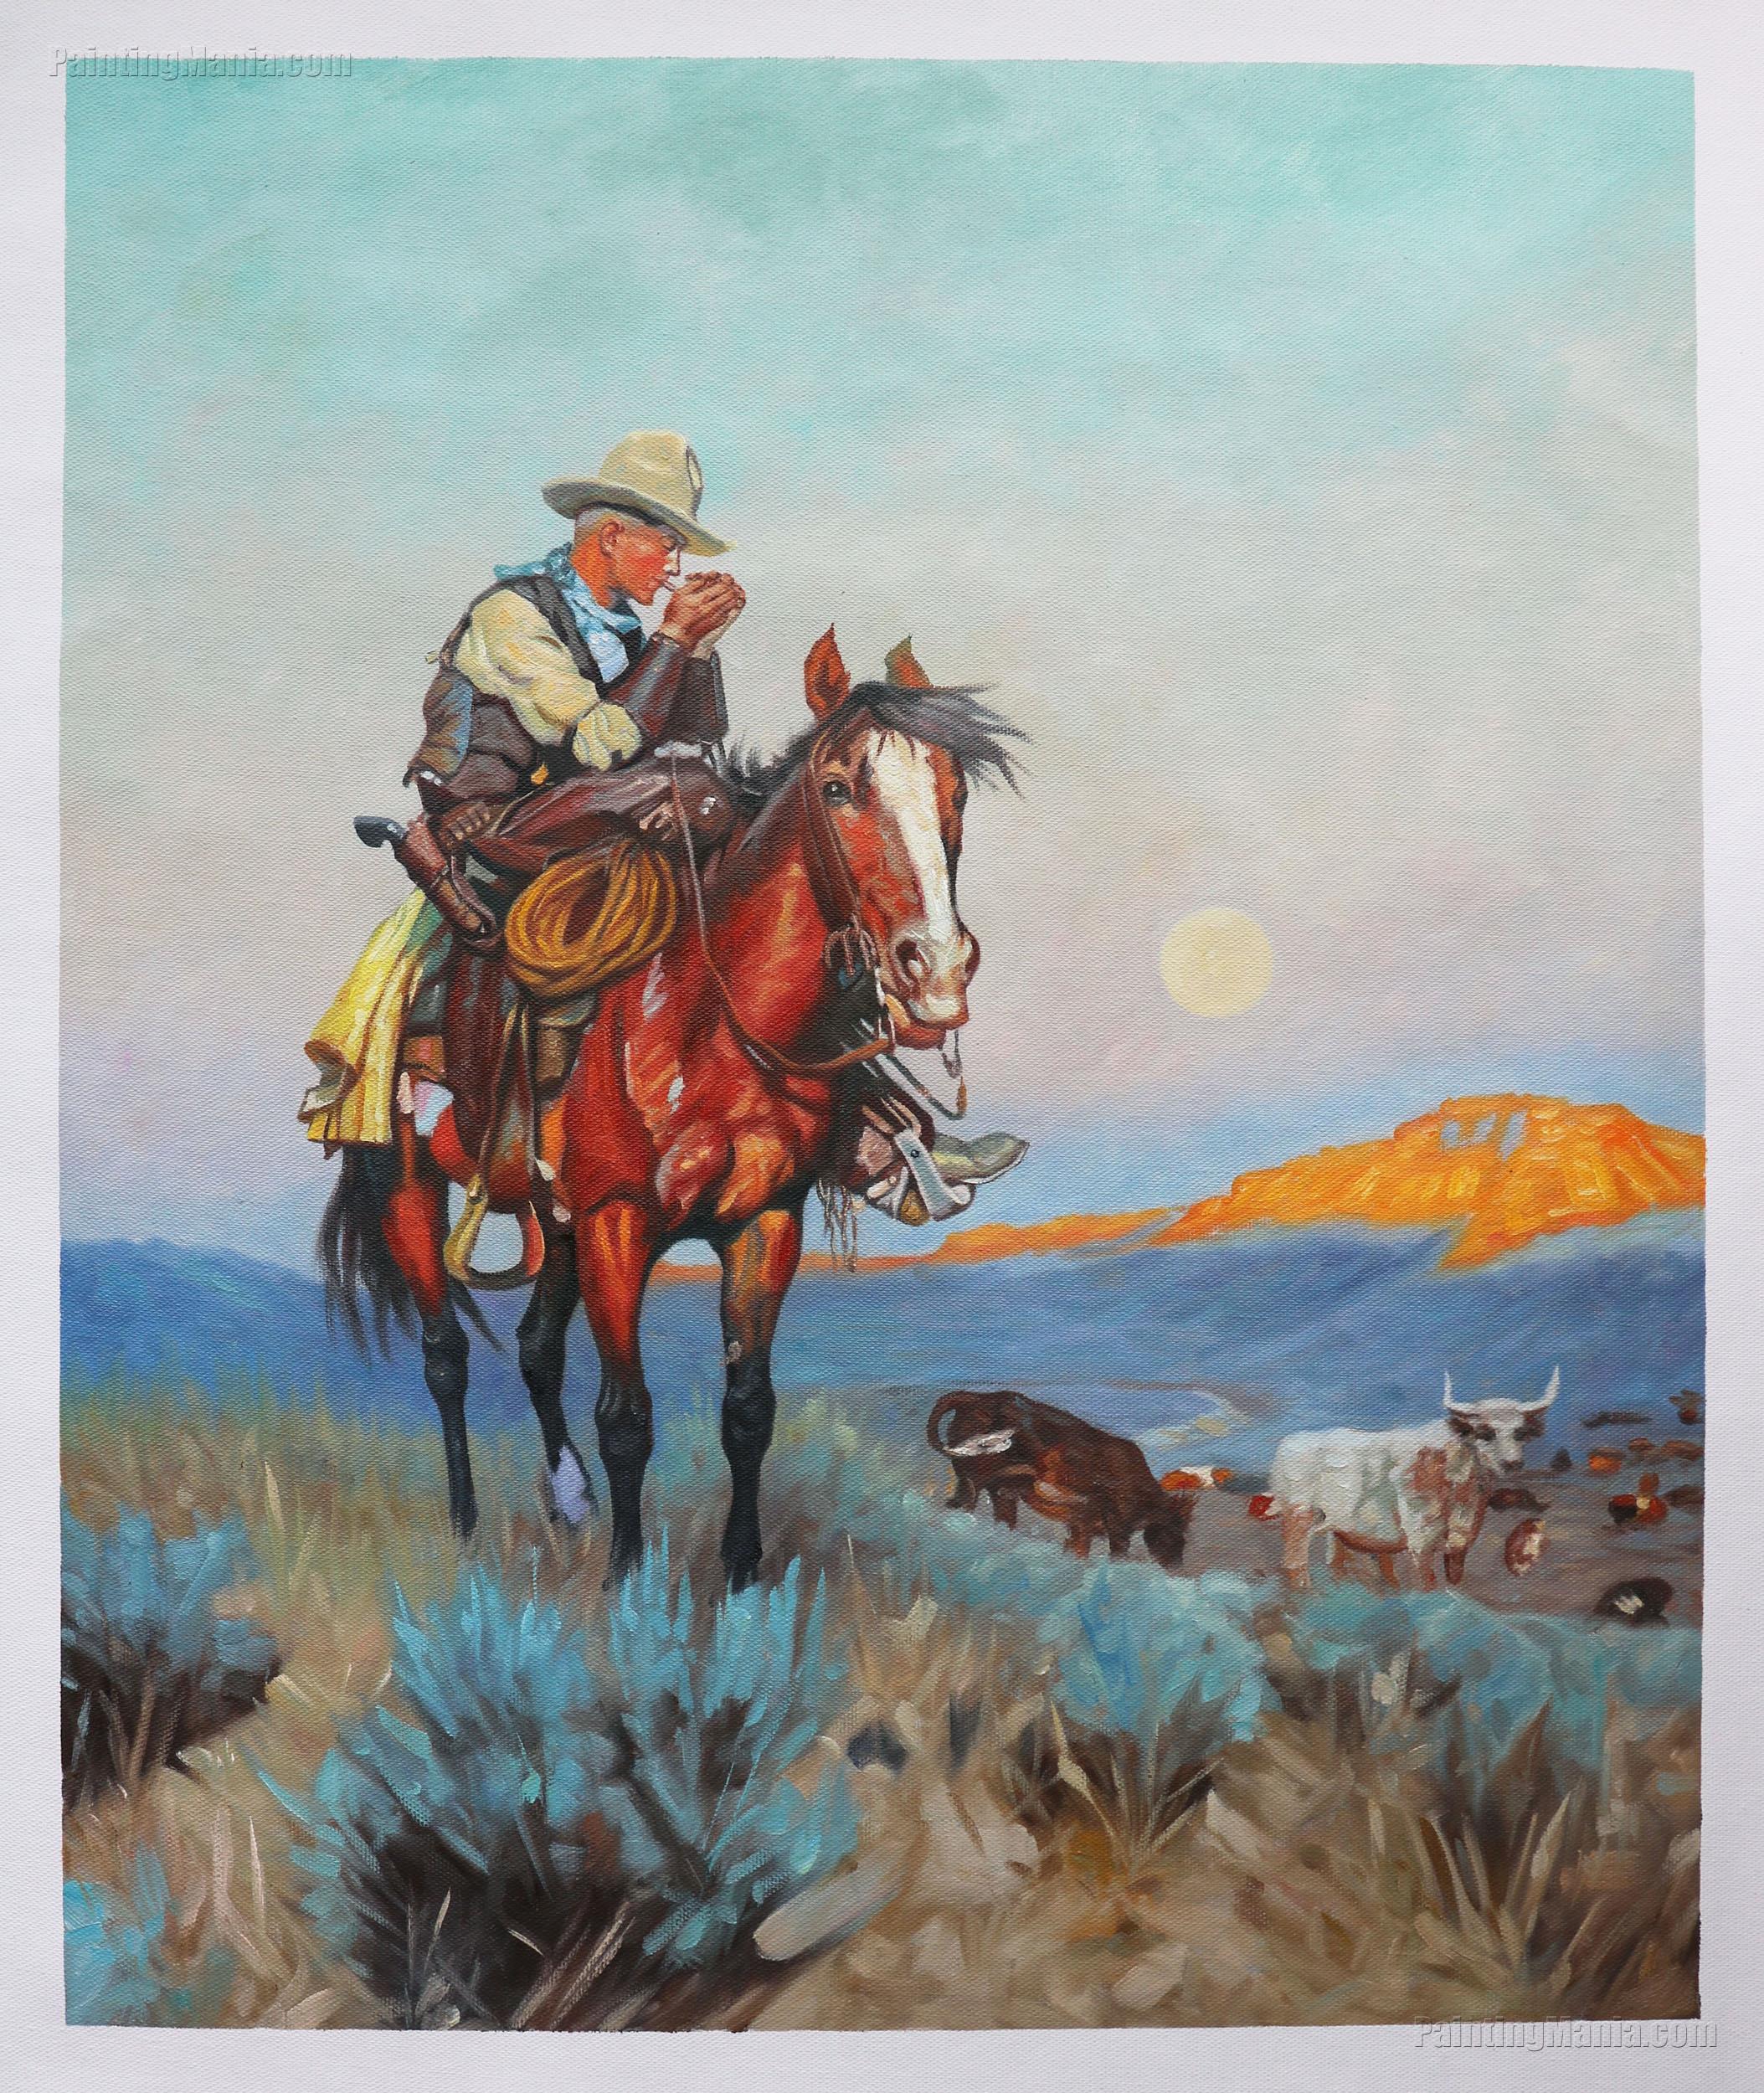 Cowboy Rancher on Horse